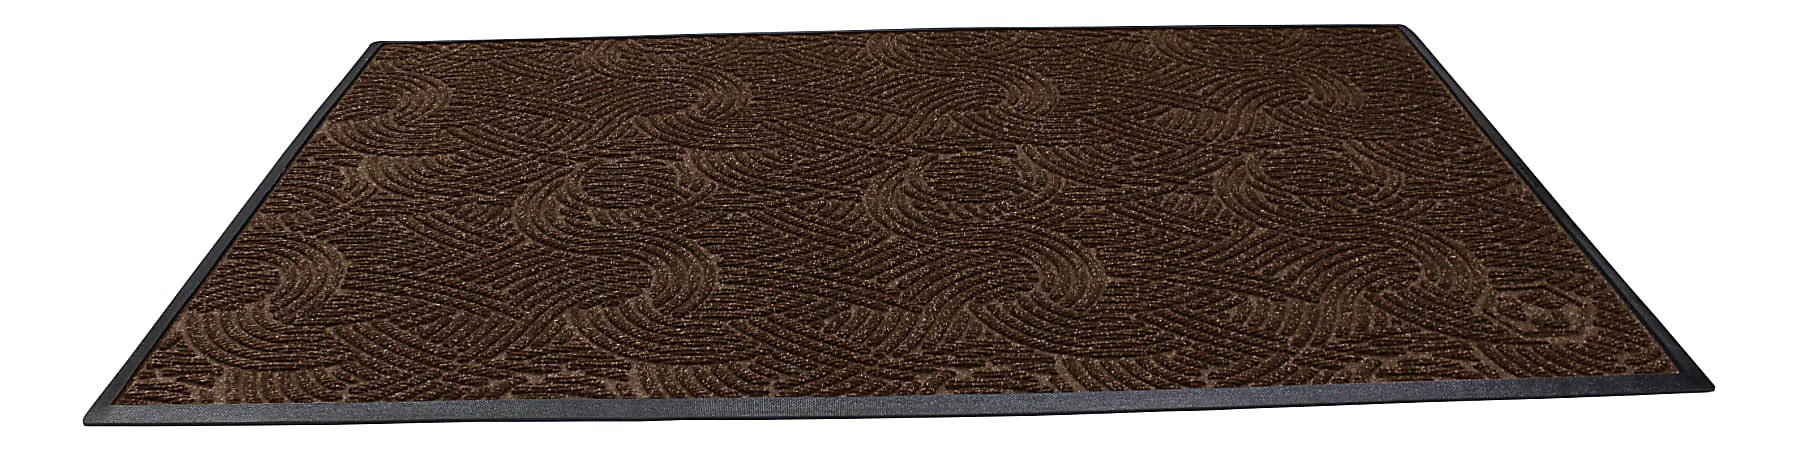 Waterhog Plus Swirl Floor Mat, 36" x 48", Chestnut Brown